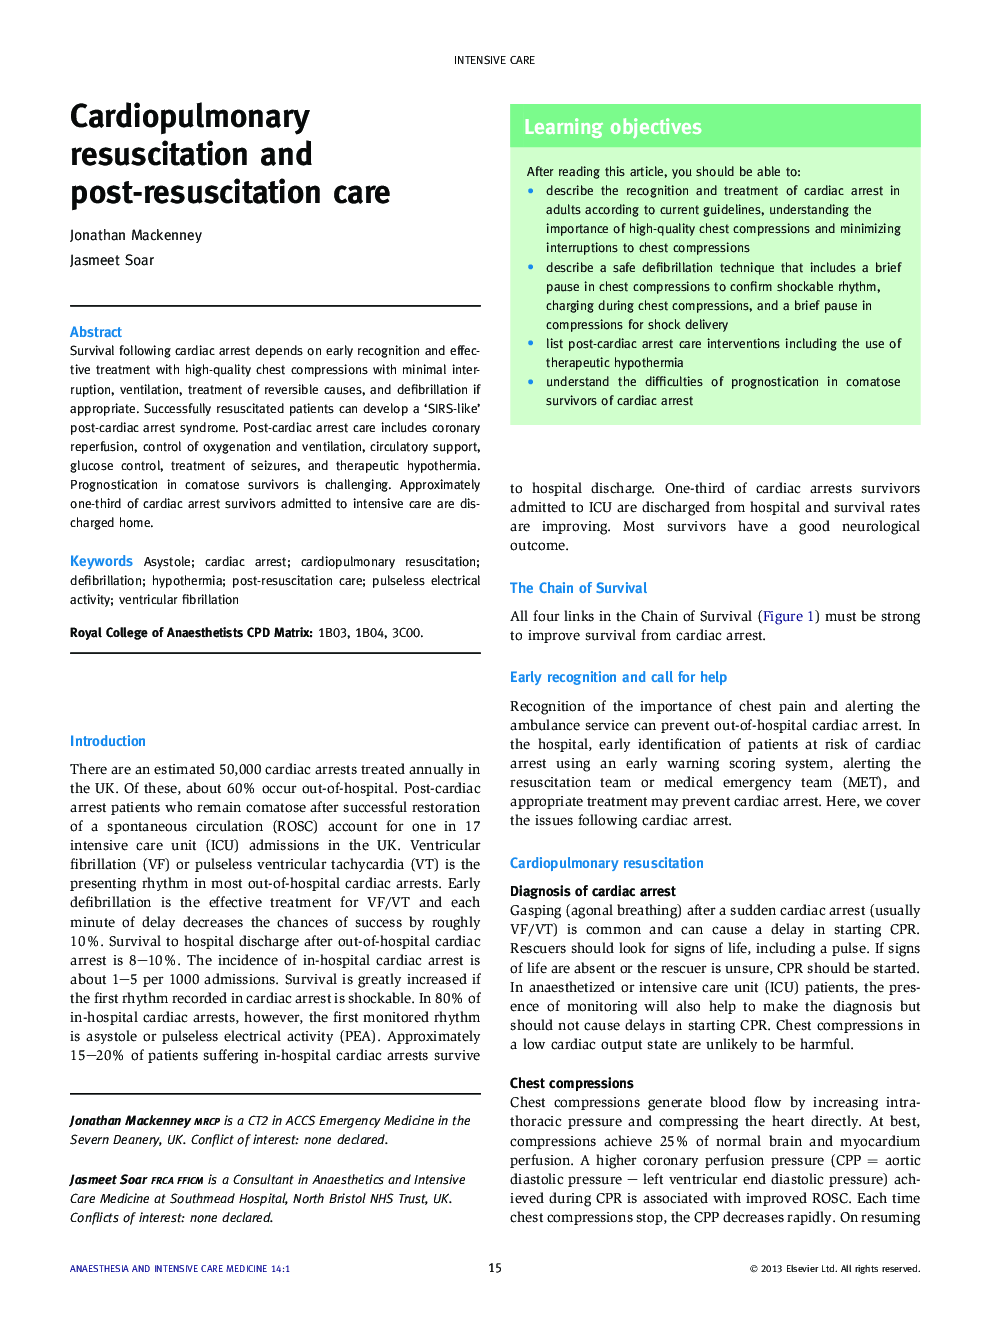 Cardiopulmonary resuscitation and post-resuscitation care